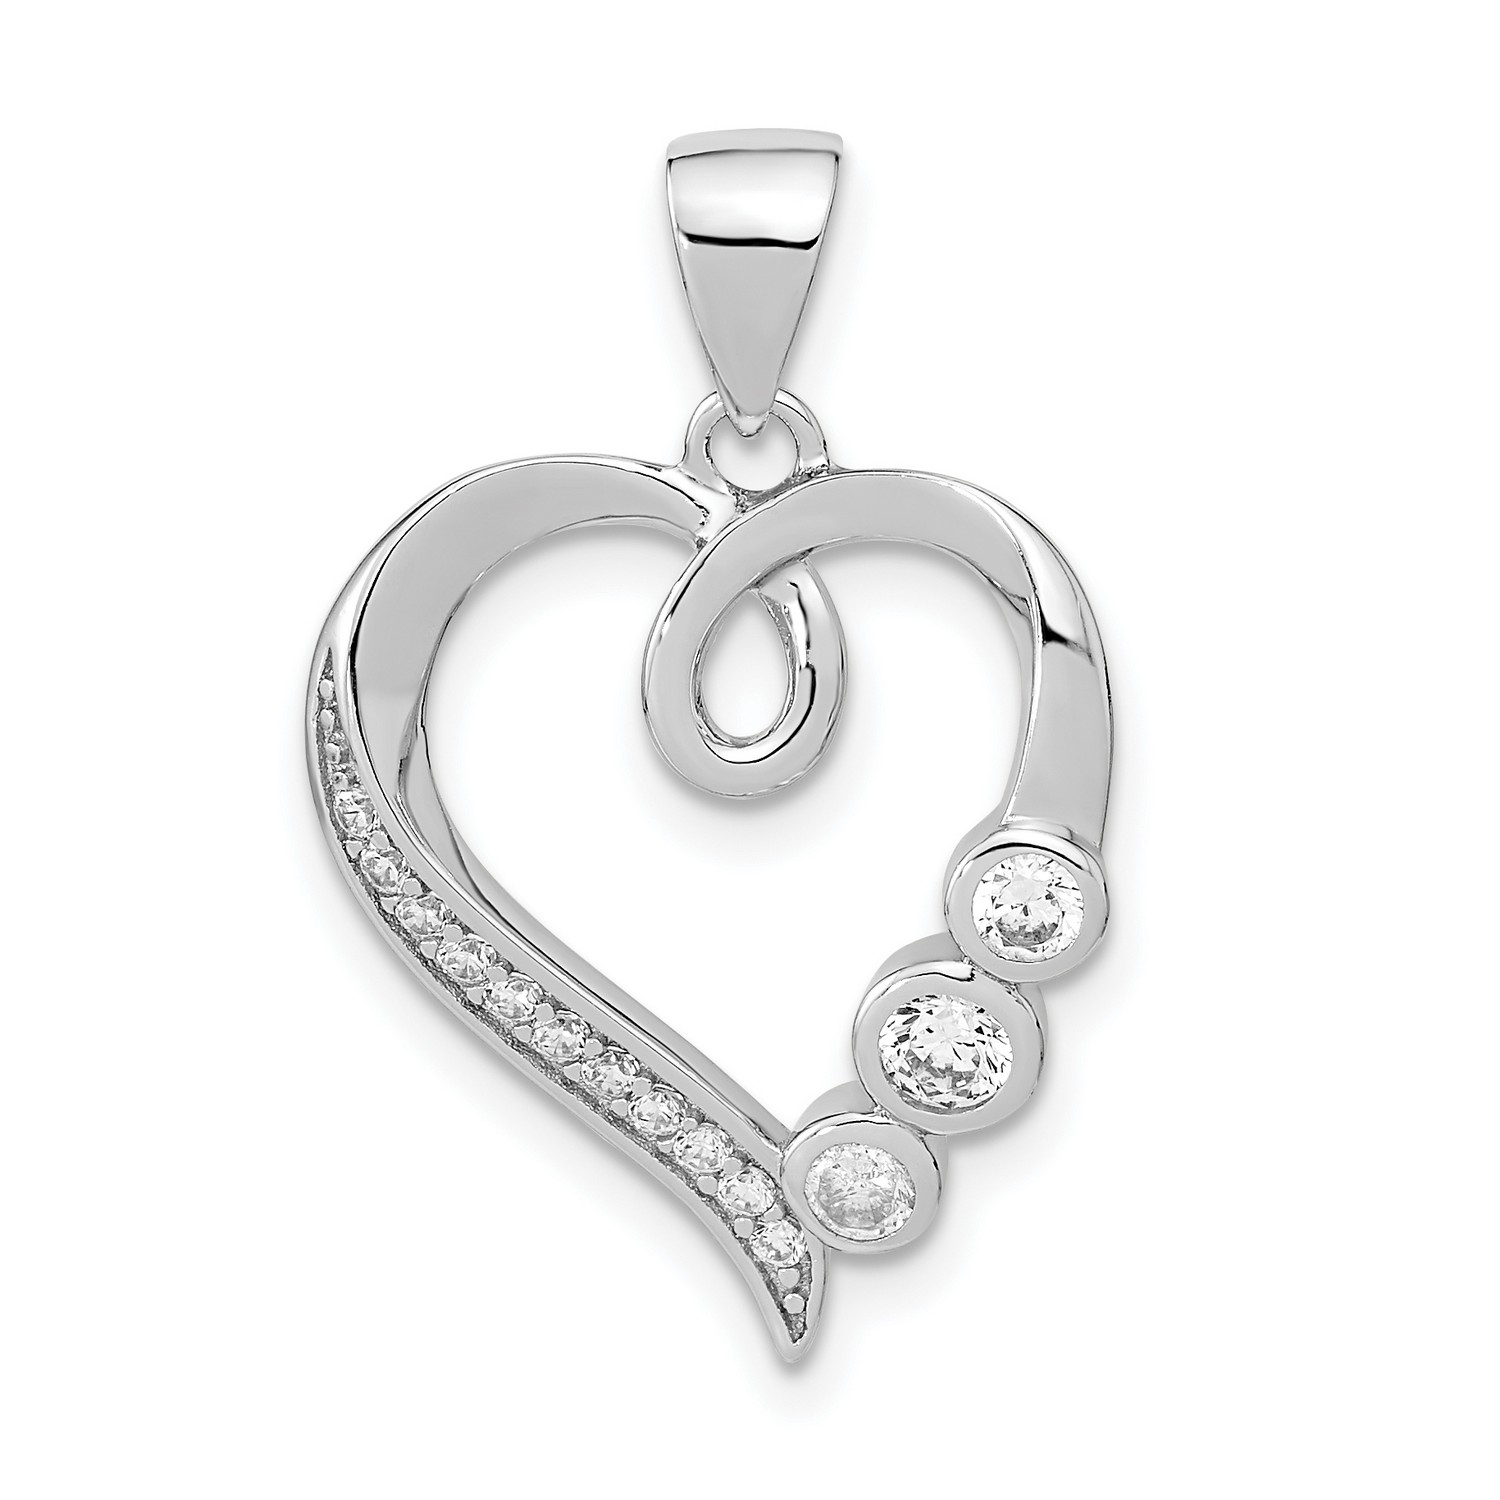 Sterling Silver Polished Heart CZ Charm Pendant 1.69gr | eBay